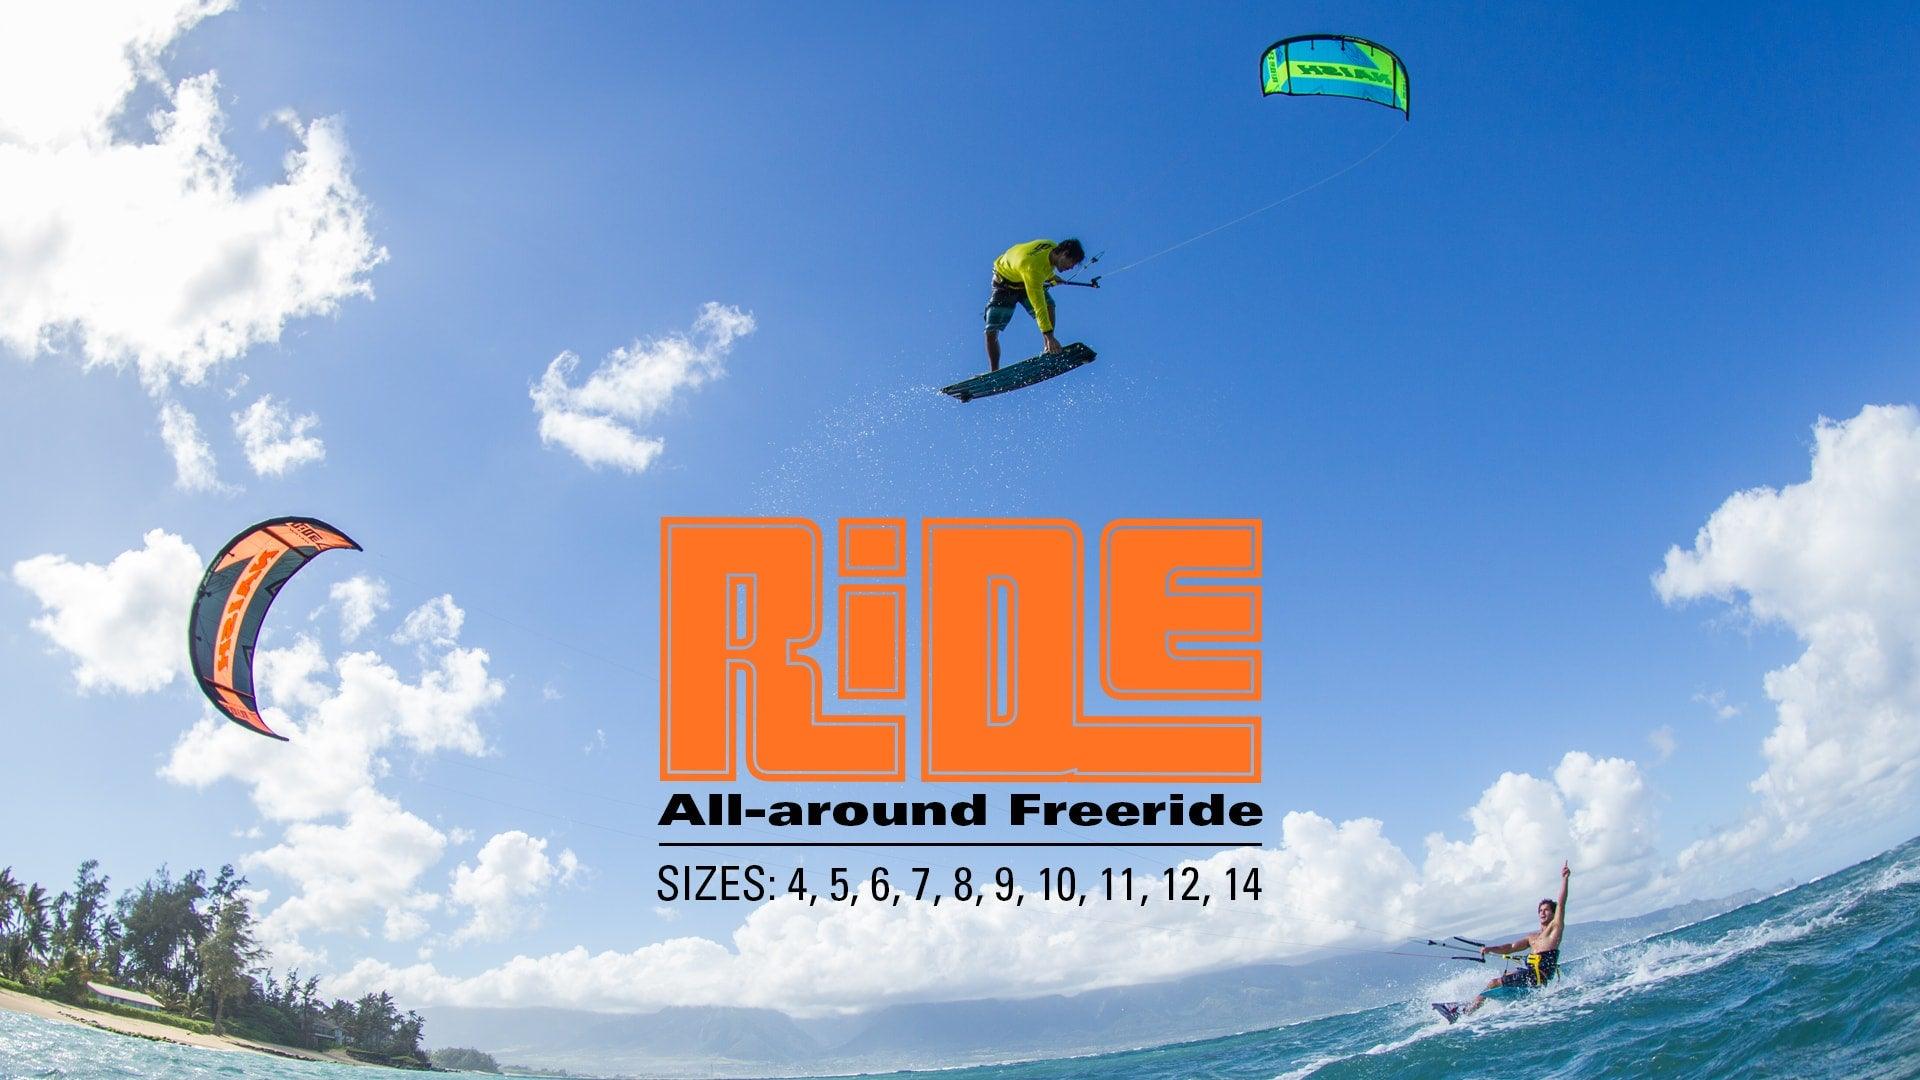 2016/17 Ride – All-around Freeride - Naish.com